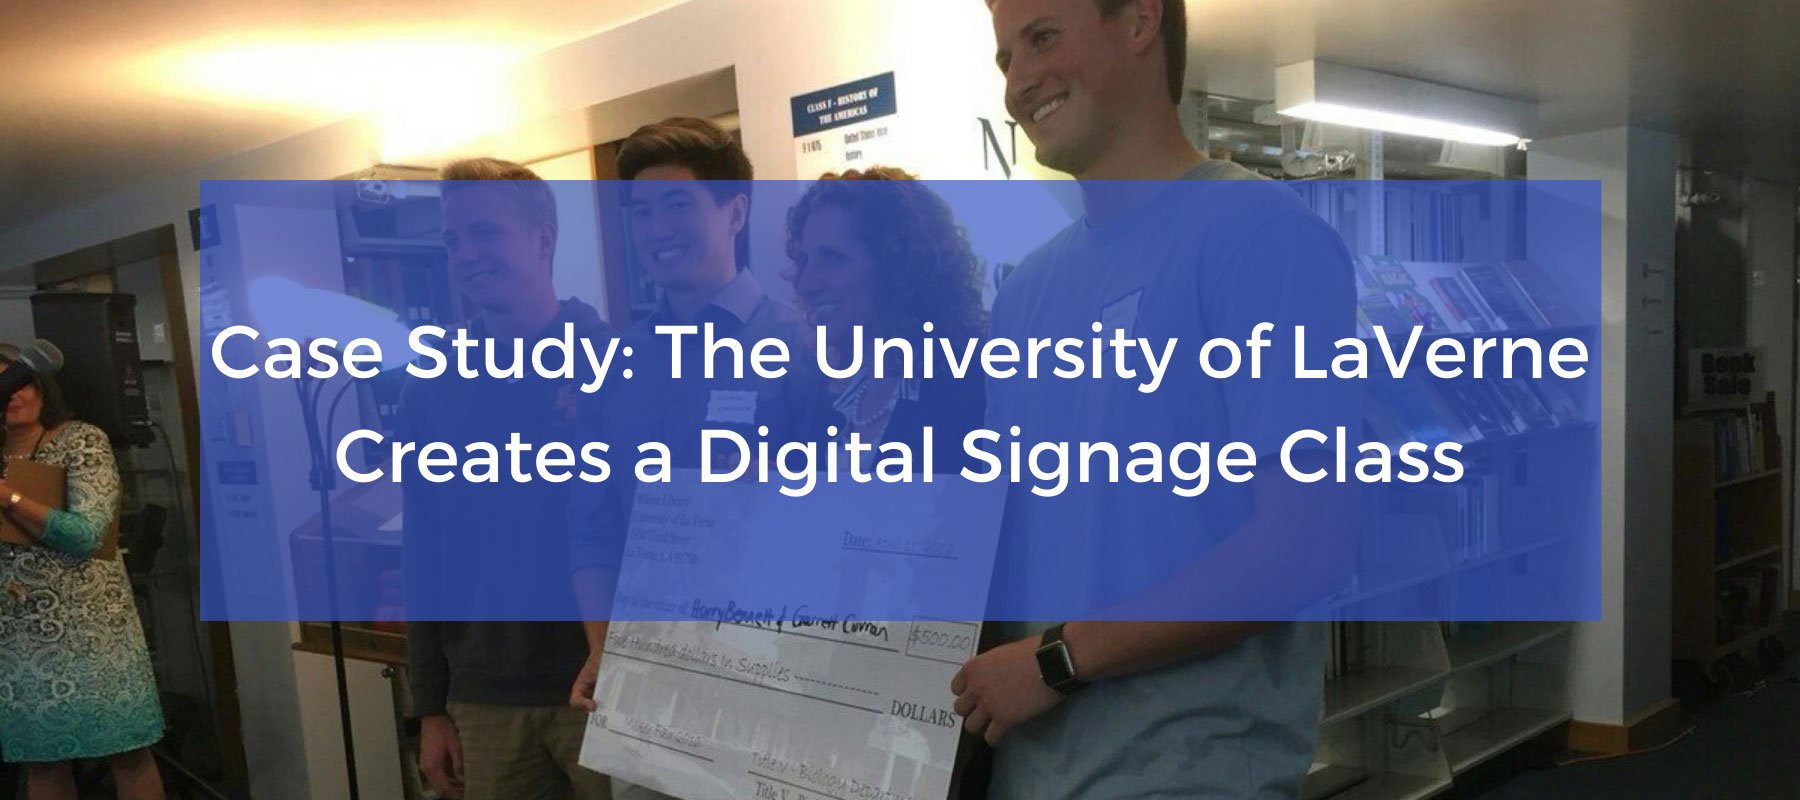 The University of LaVerne Creates a Digital Signage Class